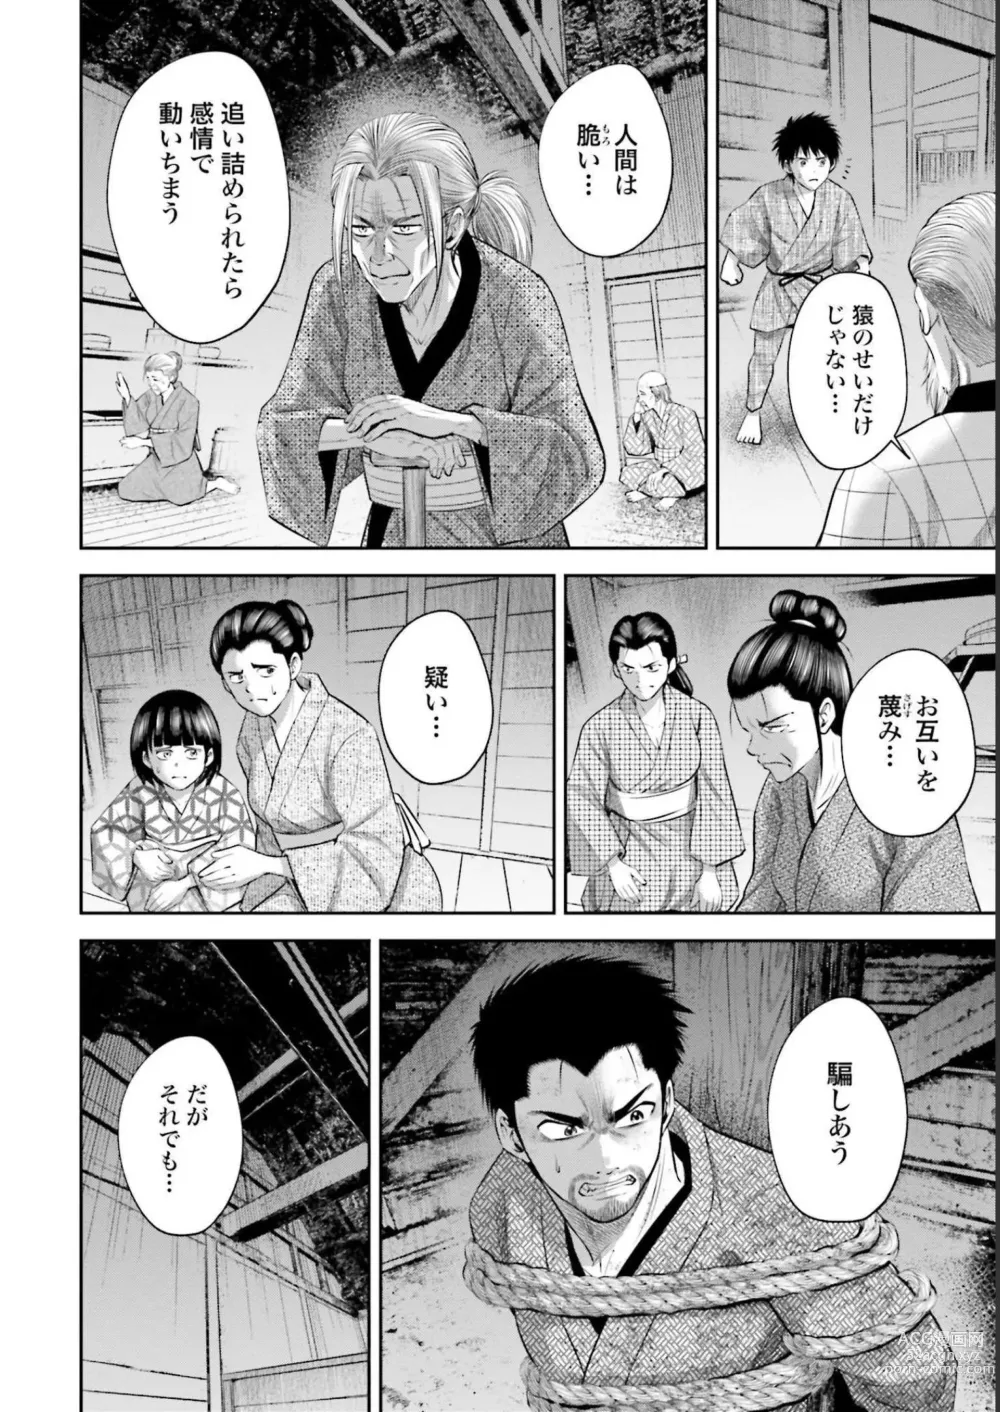 Page 154 of manga Sarumane Vol. 3